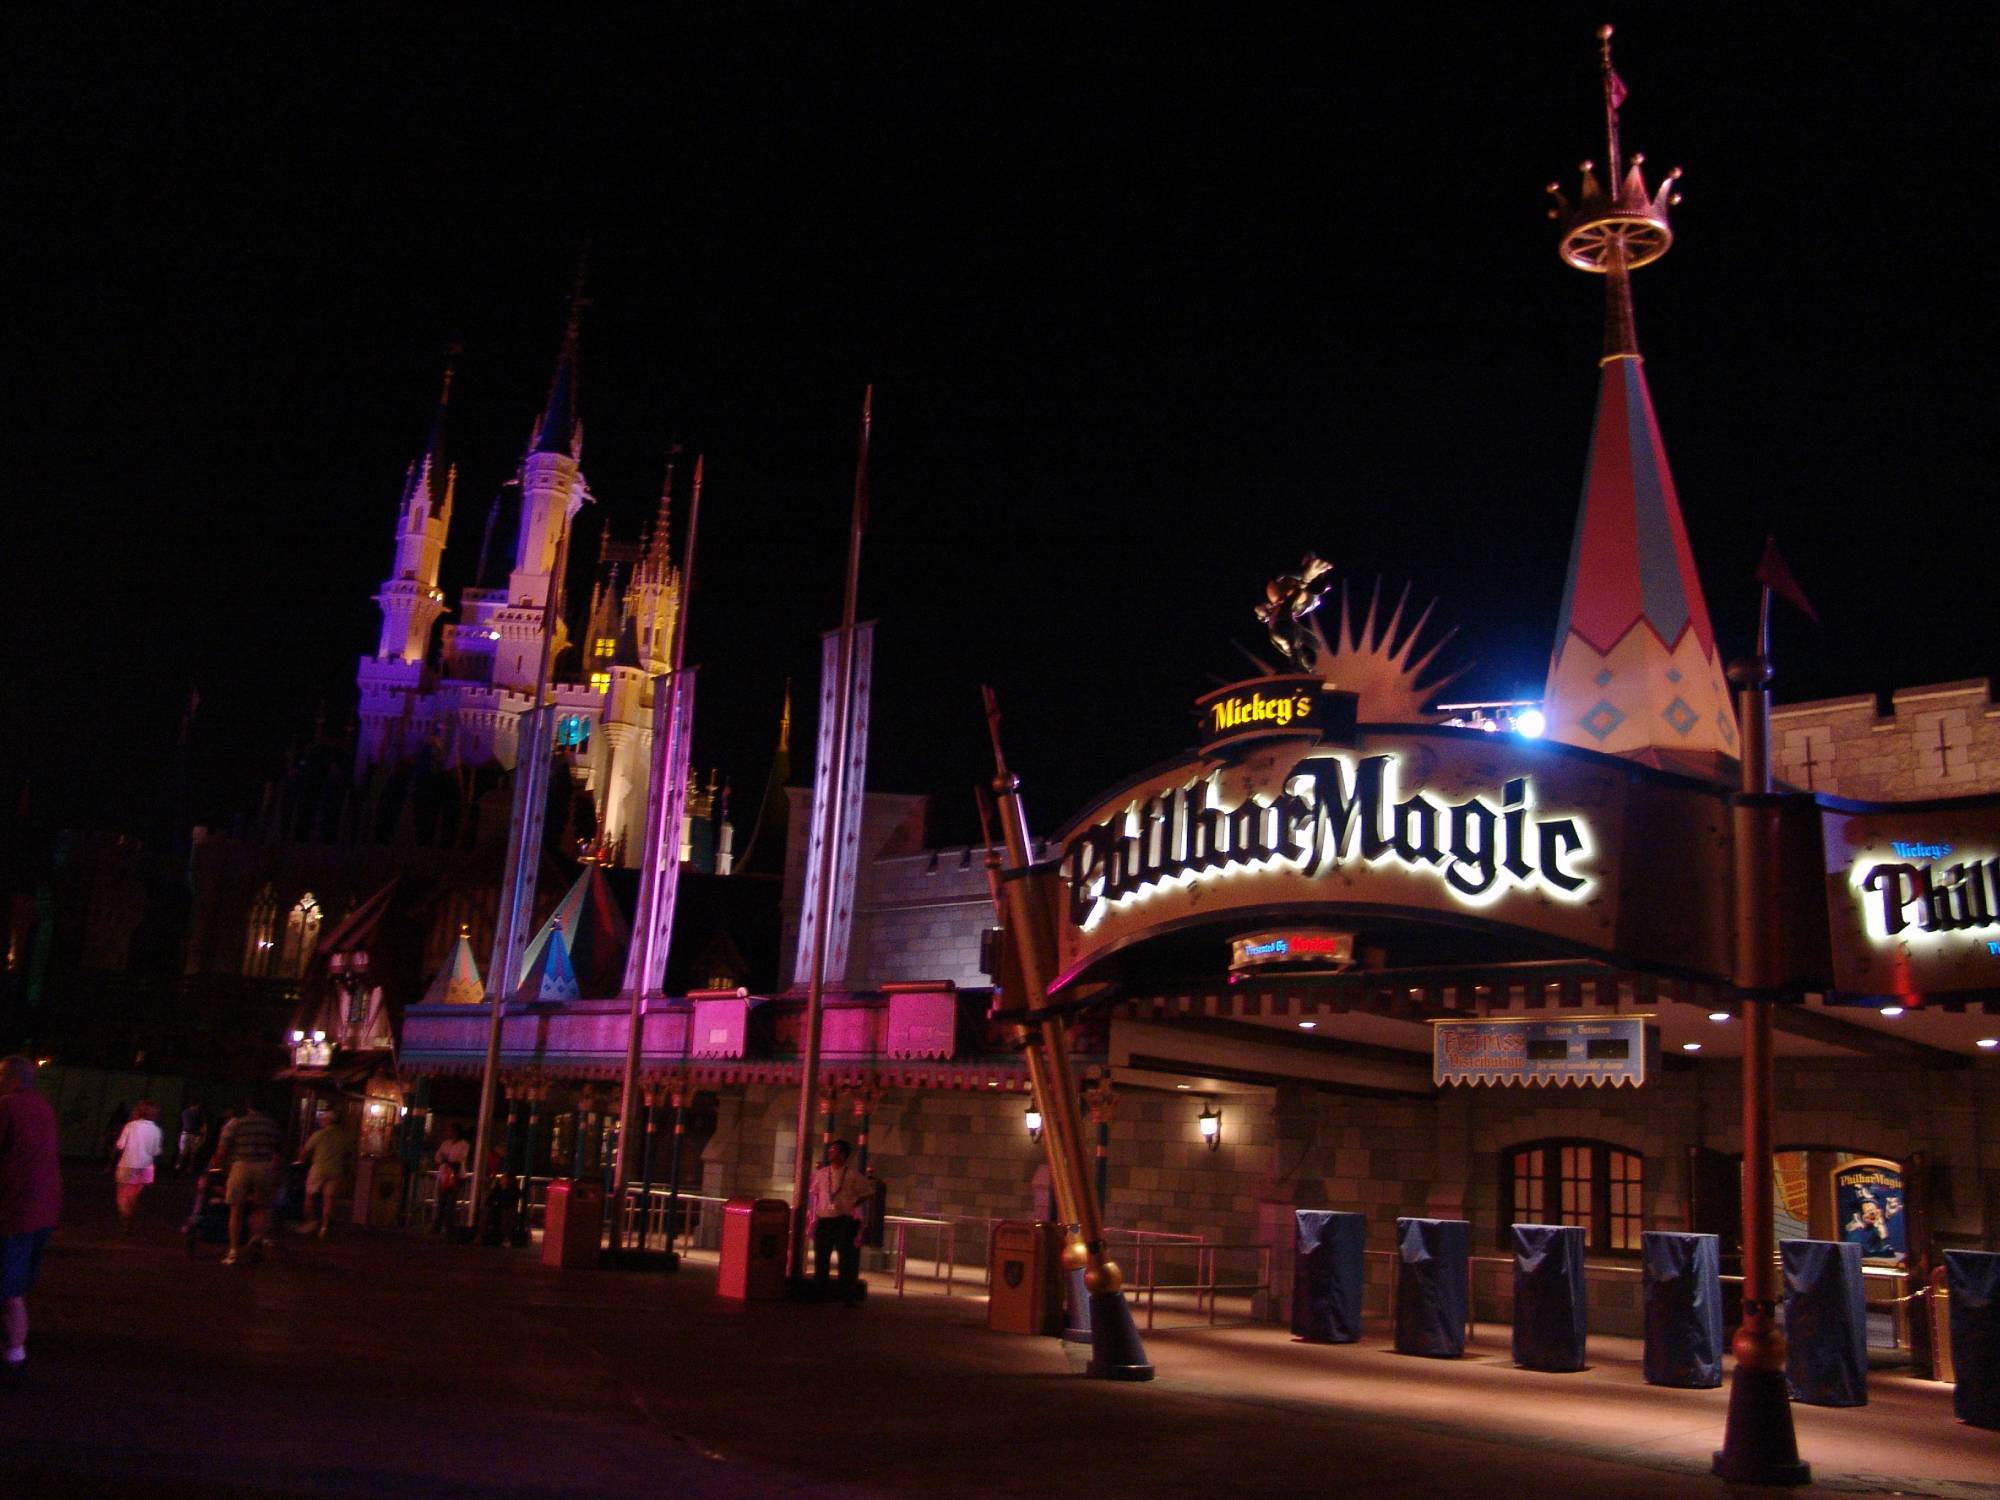 Magic Kingdom - Mickey's PhilharMagic and Cinderella's Castle